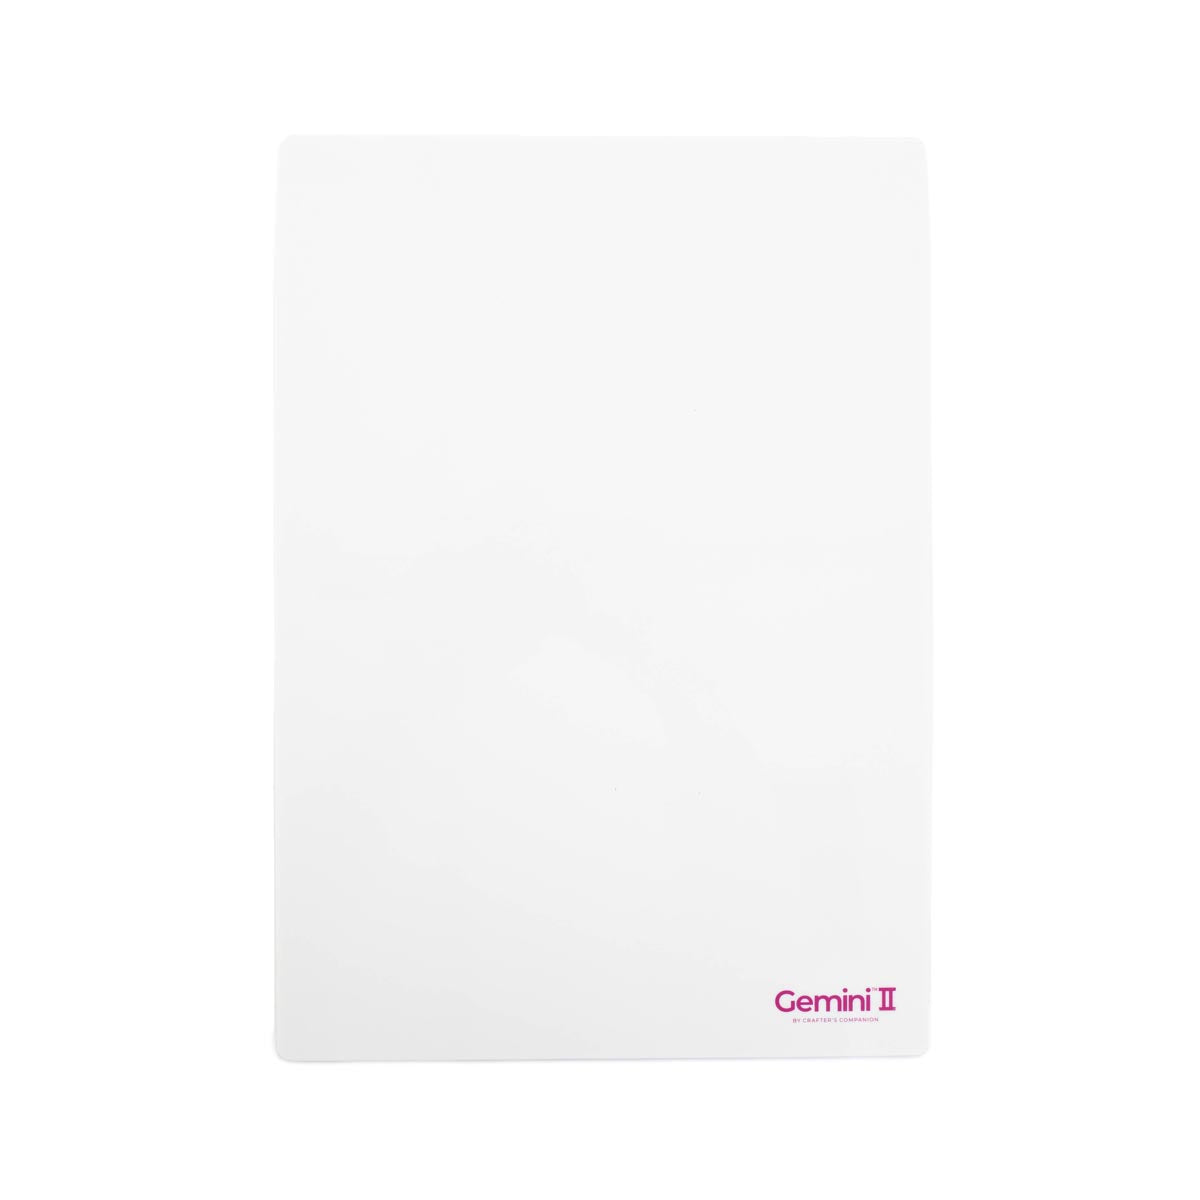 Crafter's Companion - Gemini II Accessories - White Cutting Plate 9 "X12.5"